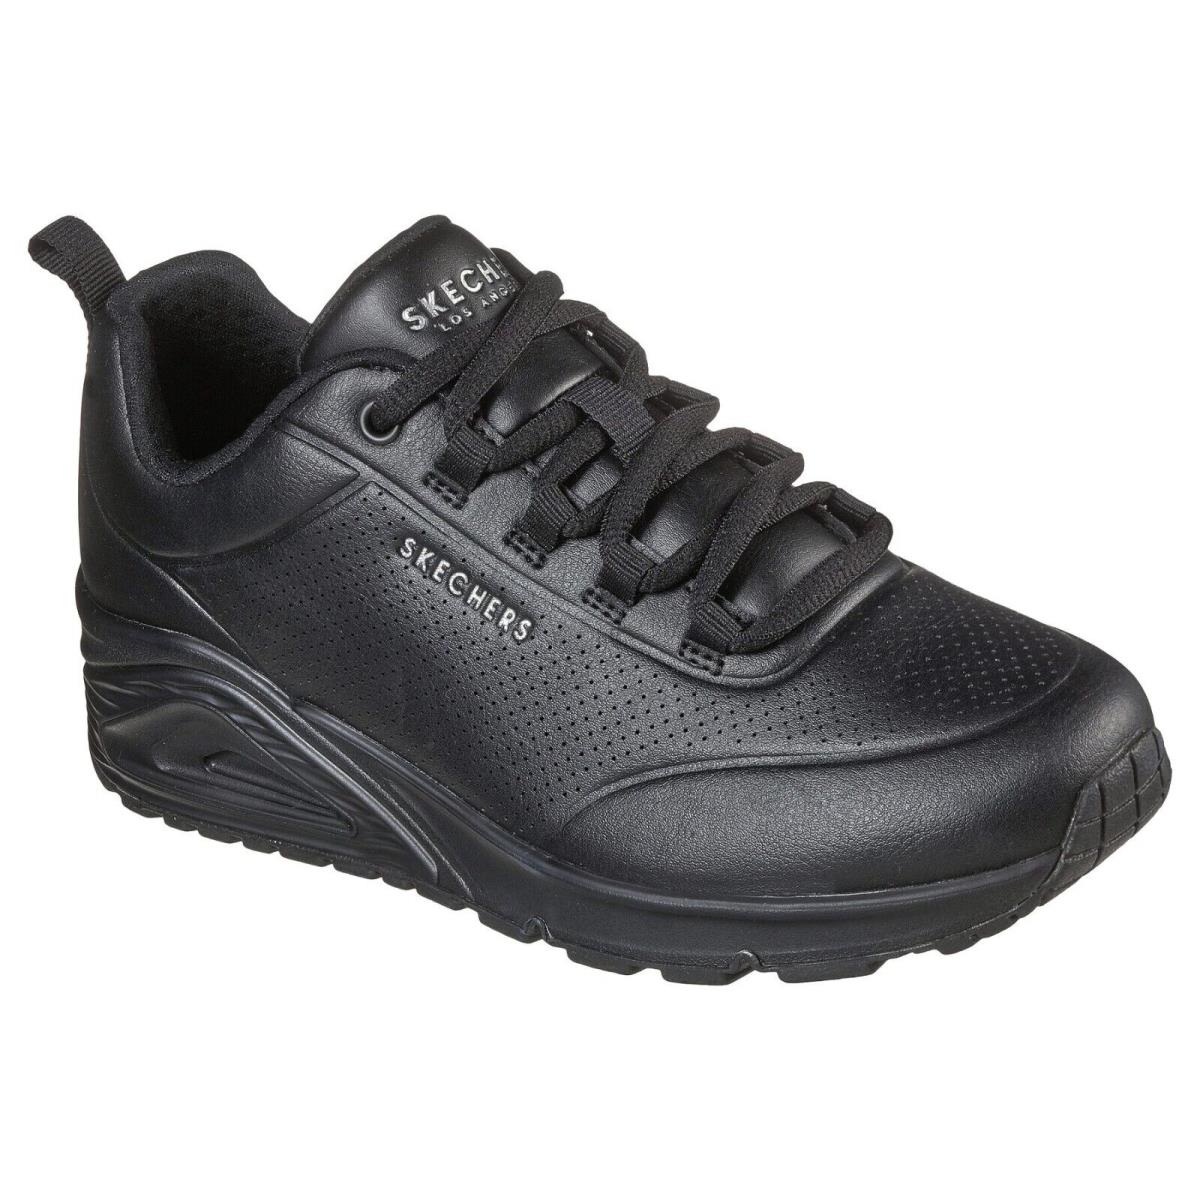 Skechers shoes Juno Linked Core - Black 9